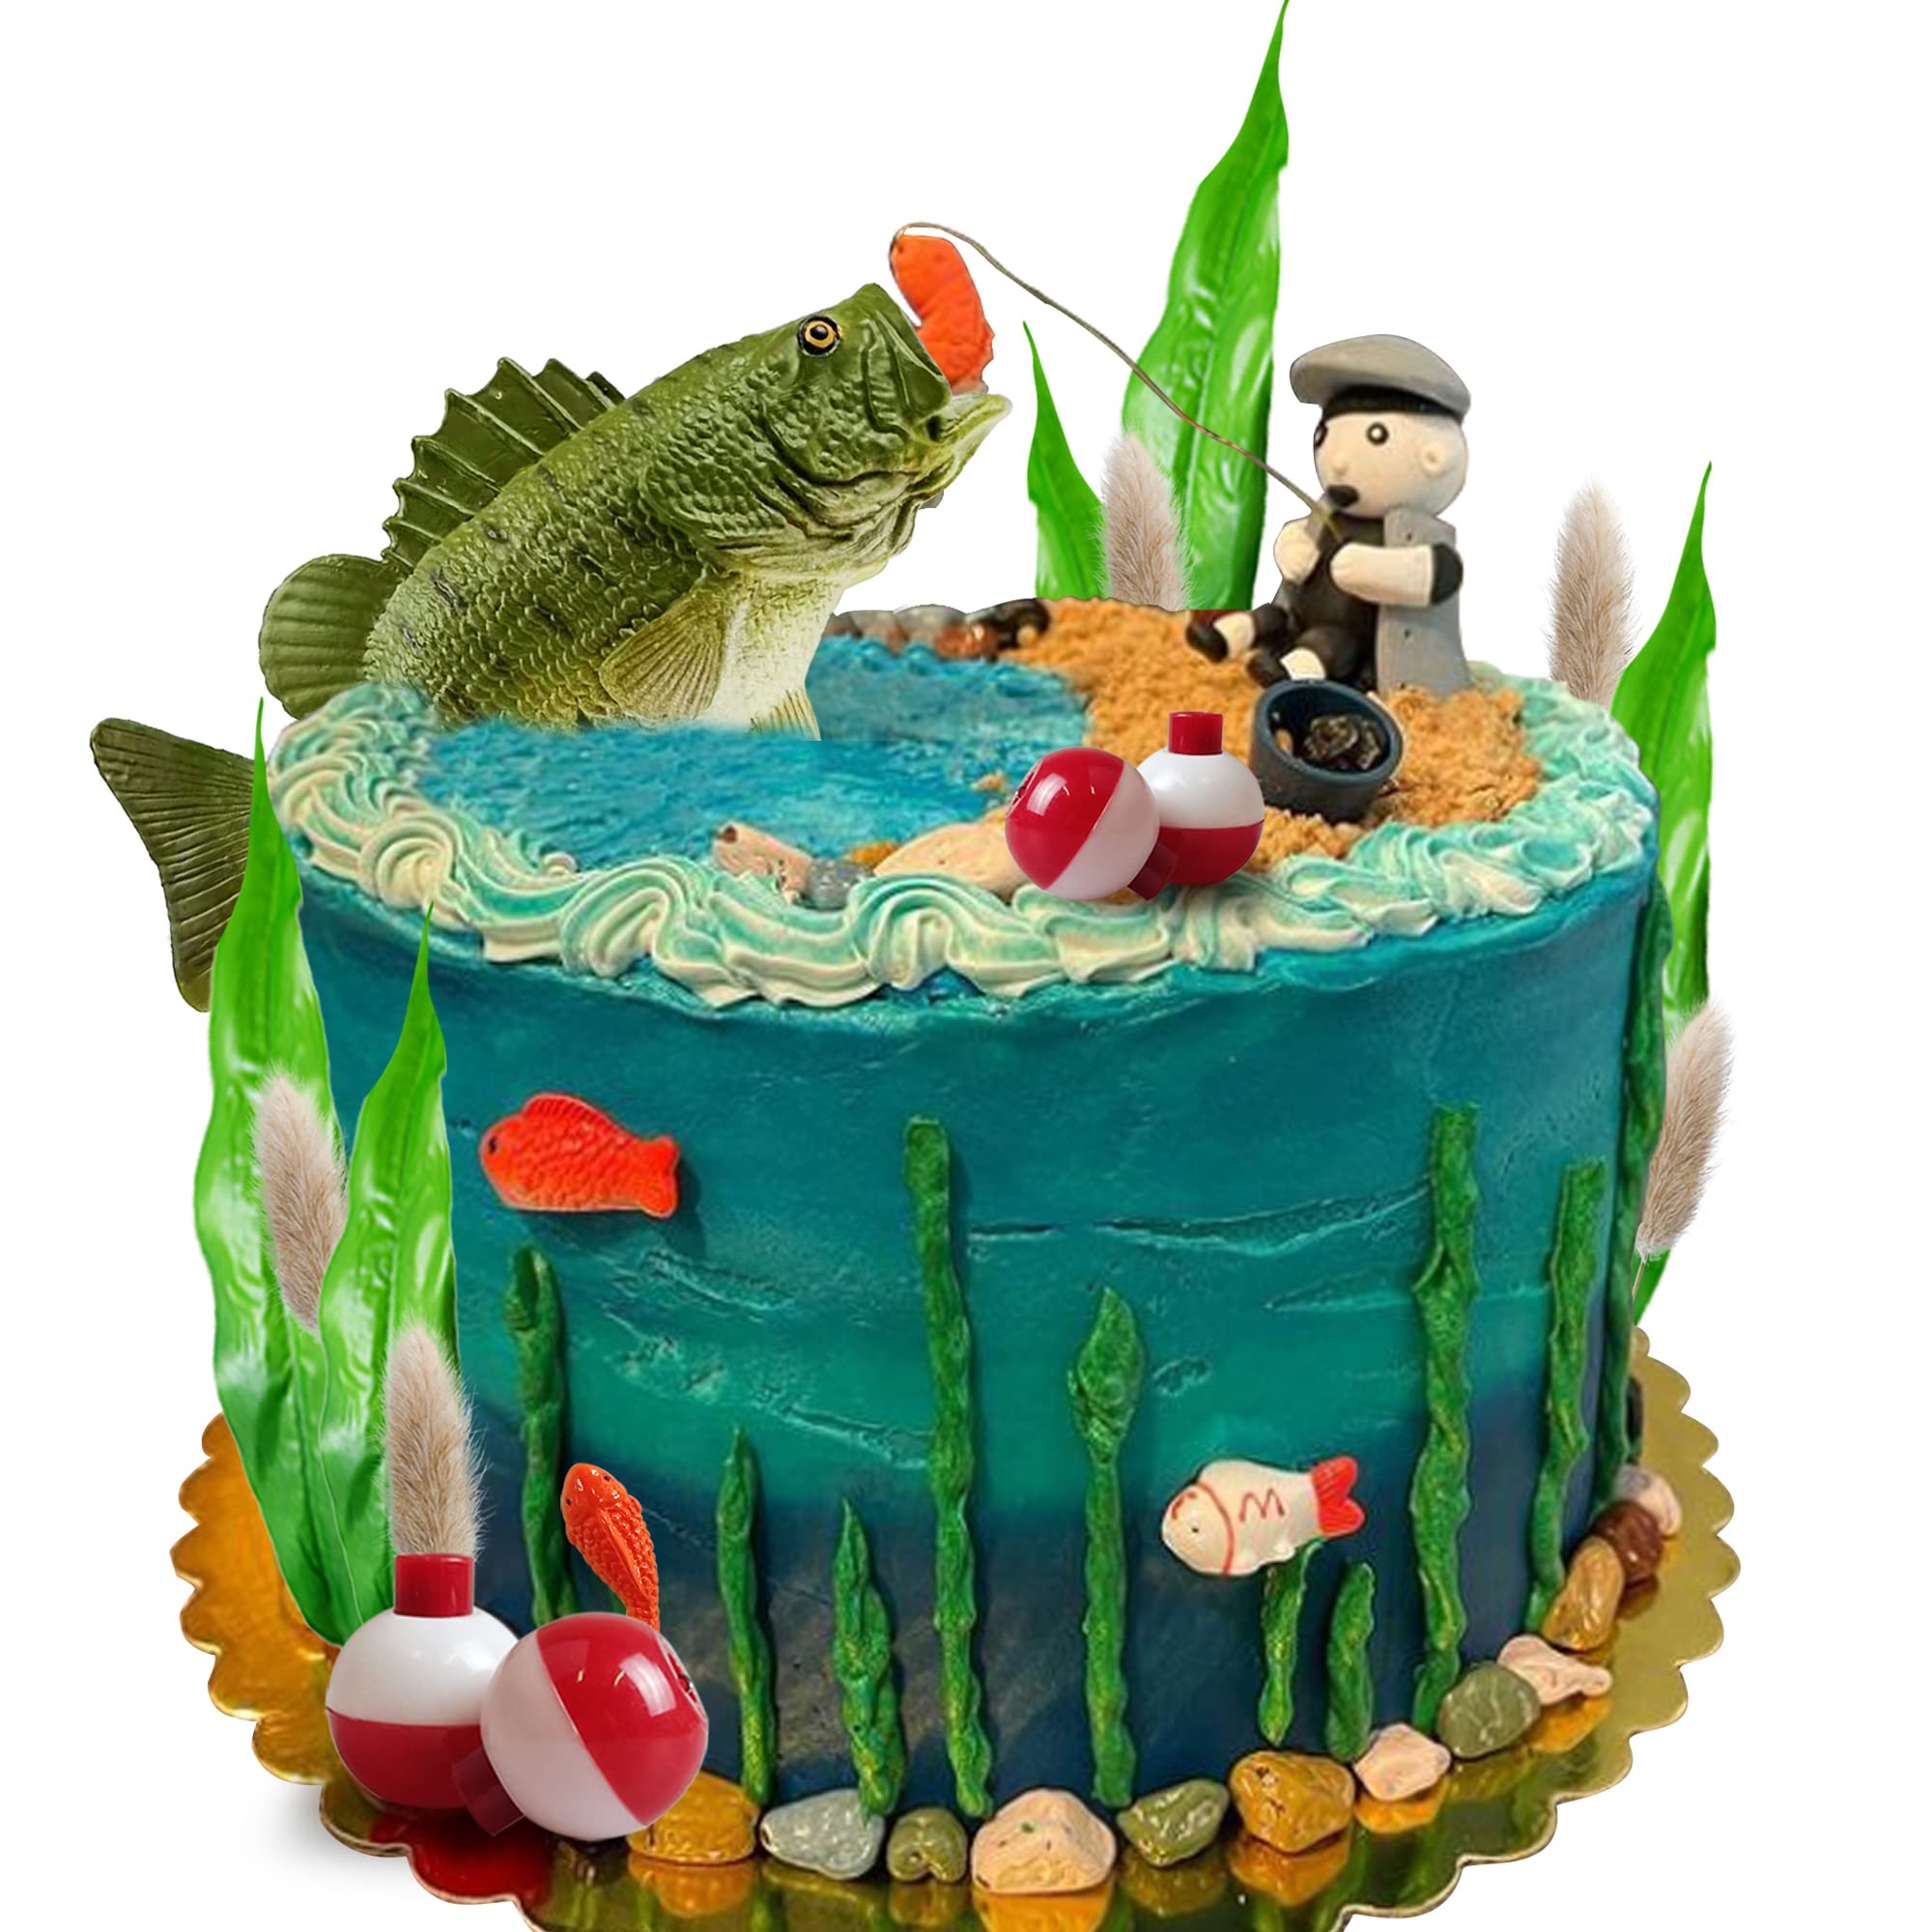 fishing cake ideas